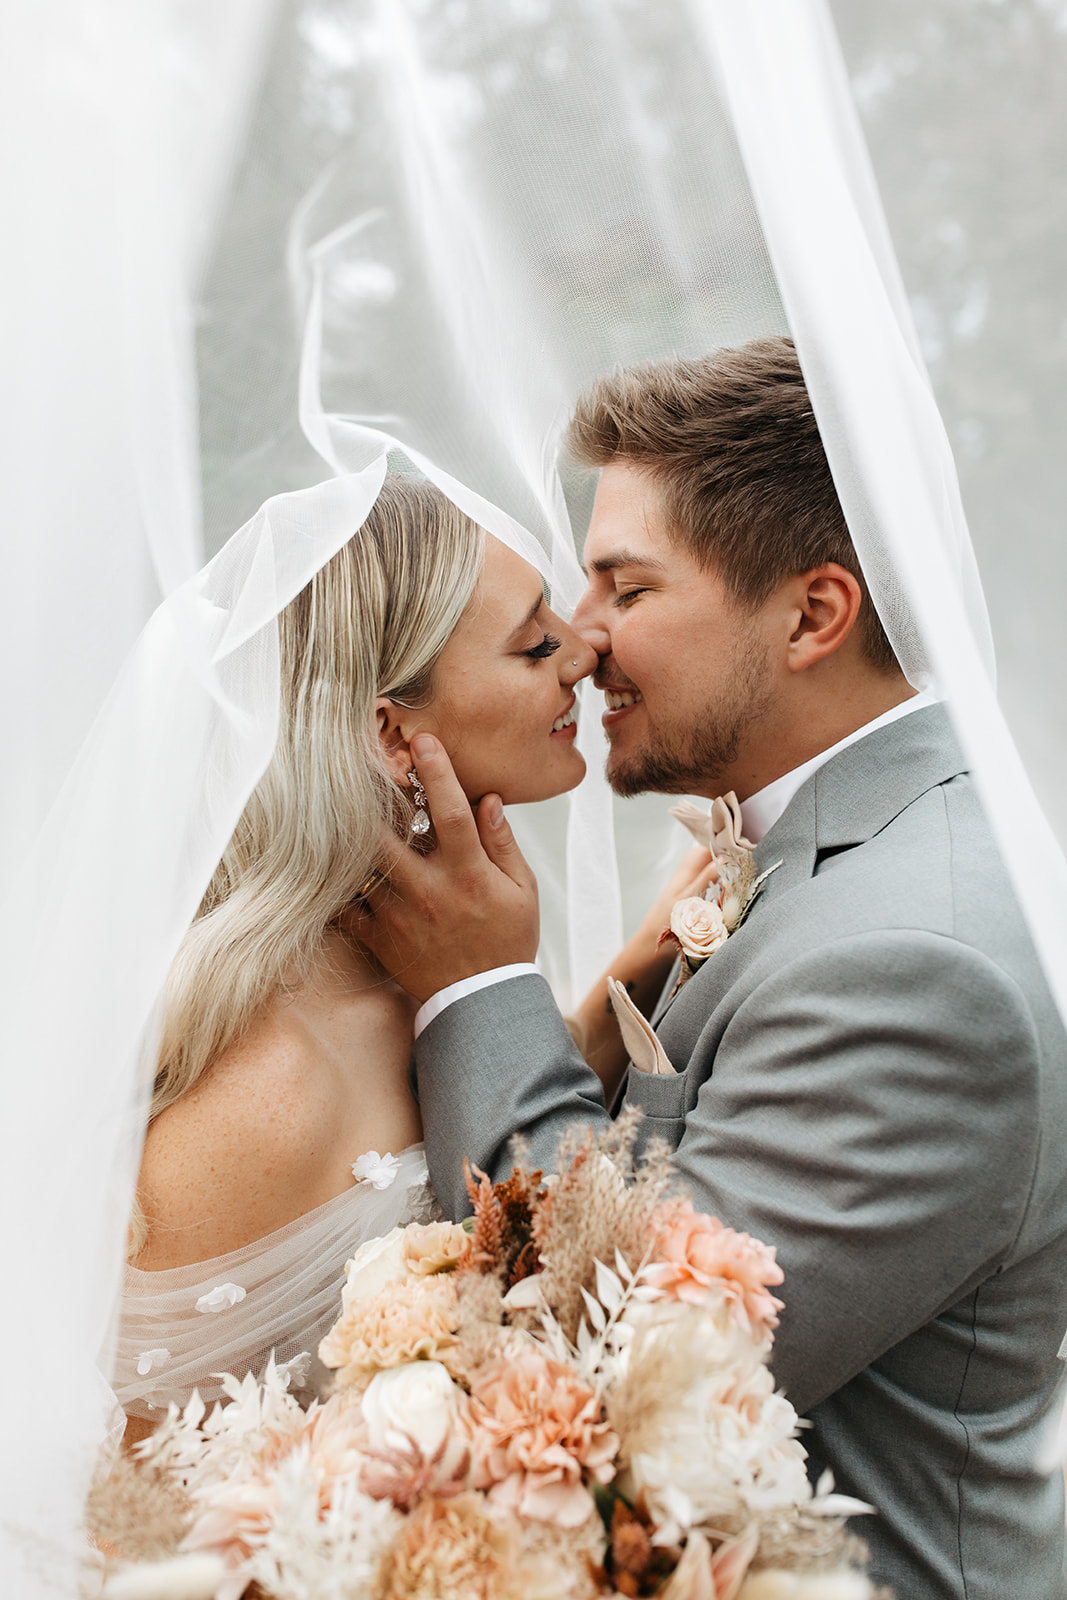 the couple kissing underneath the veil